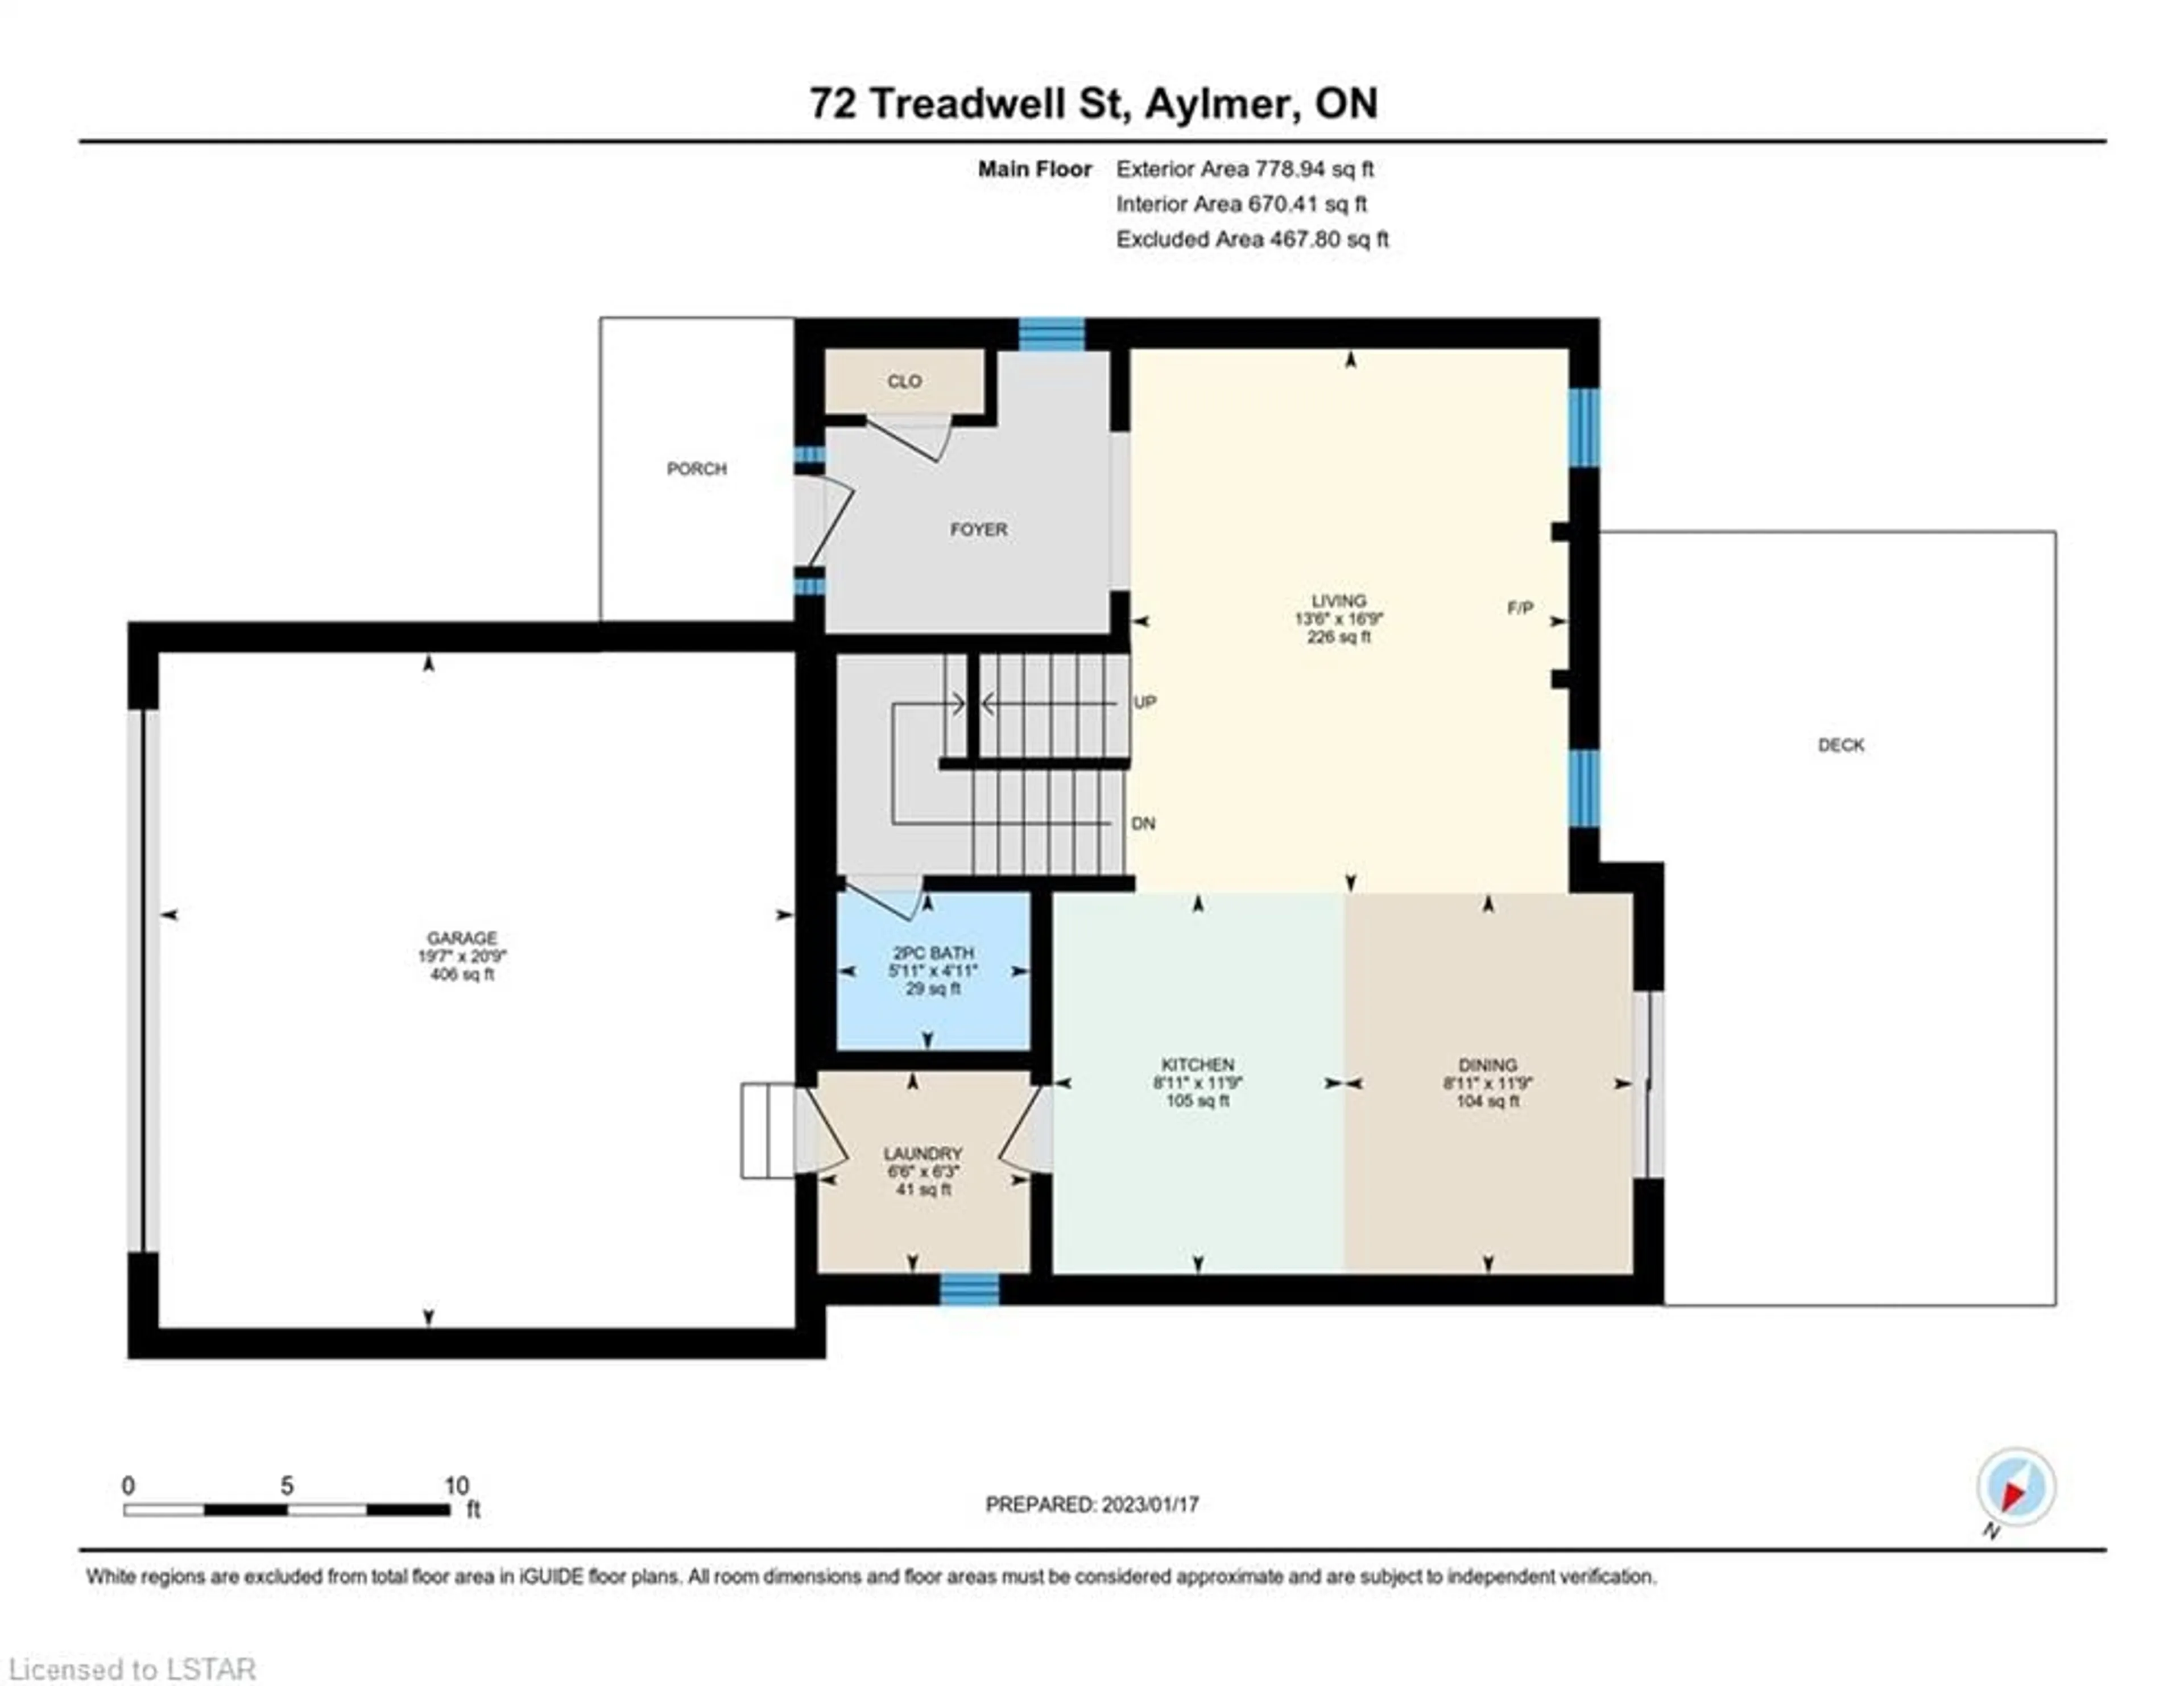 Floor plan for 72 Treadwell St, Aylmer Ontario N5H 3J5